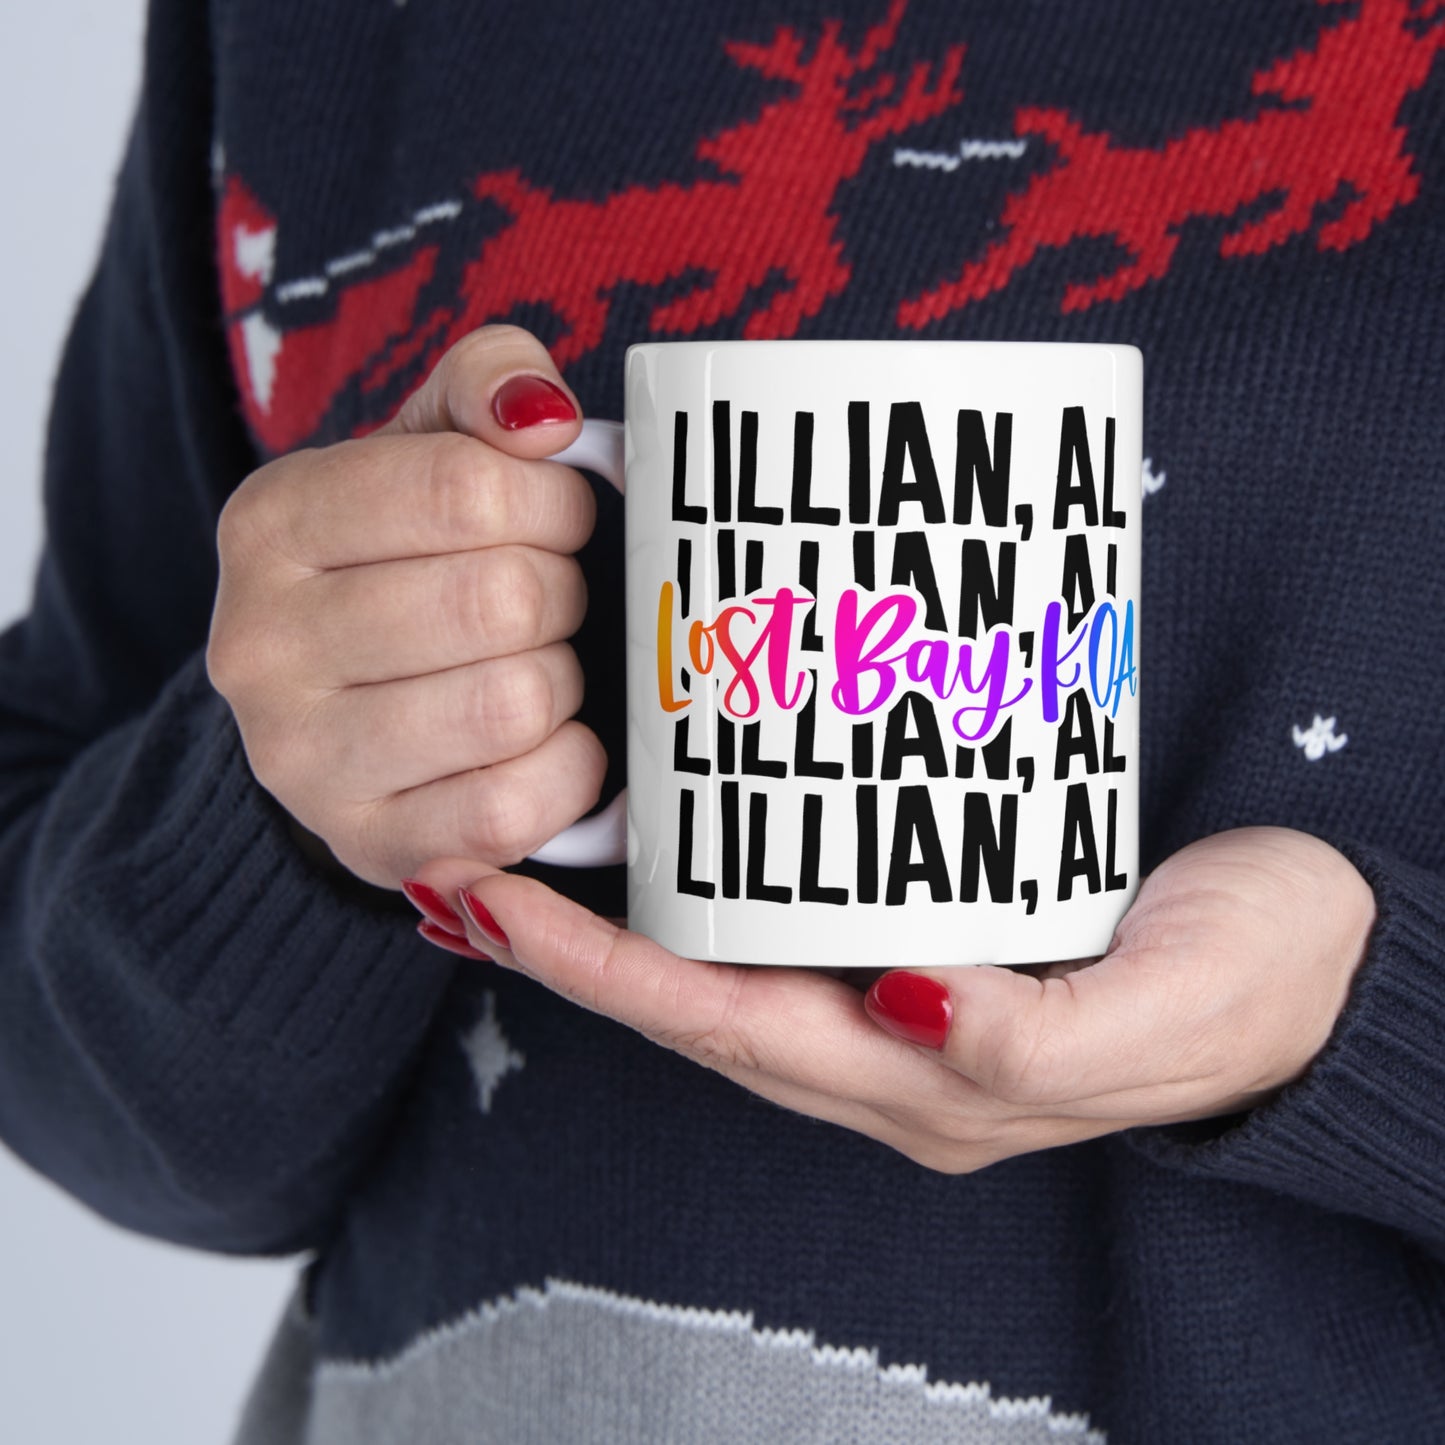 Lillian Lost Bay KOA- Ceramic Mug 11oz